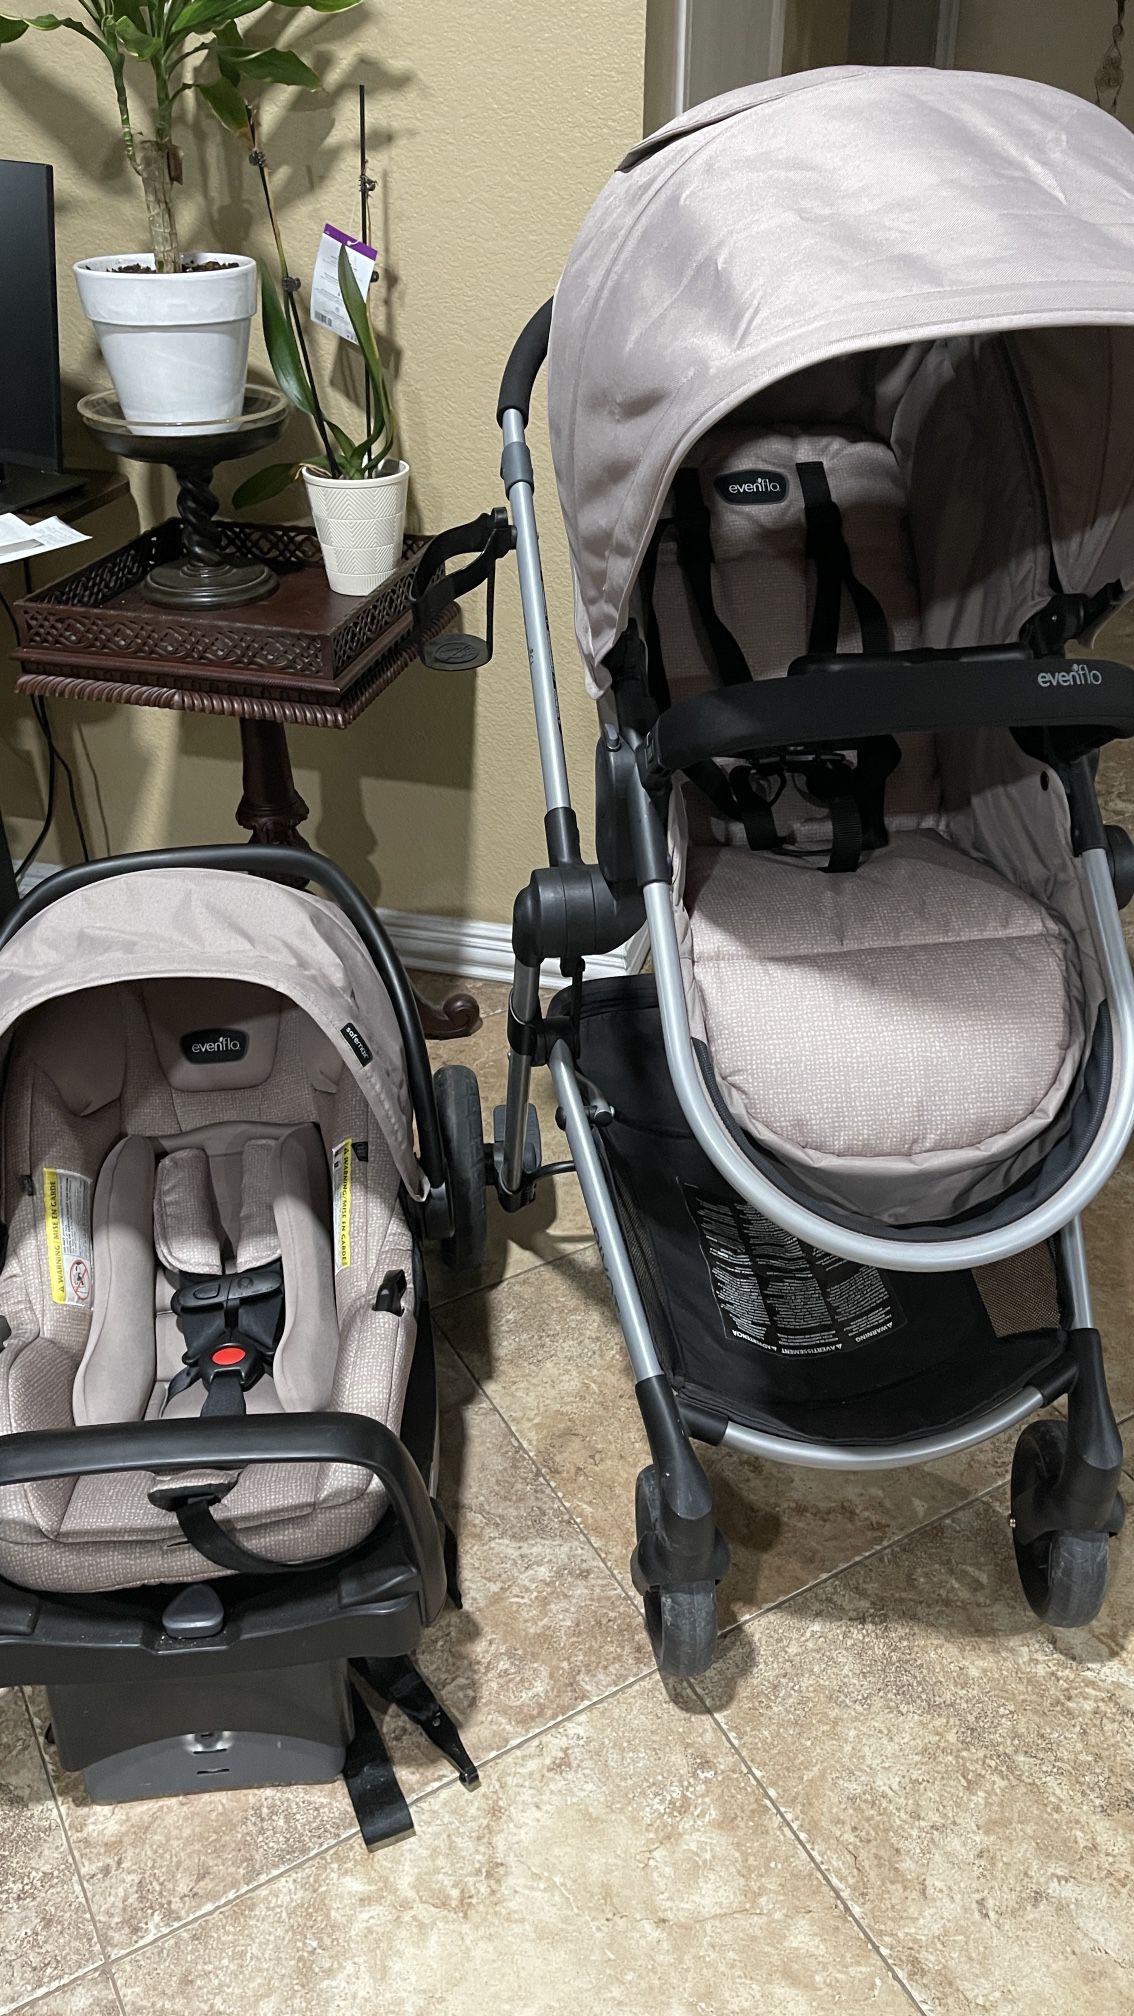 Evenflo Pivot Modular Travel System stroller with litemax infant car seat In desert Tan Color 